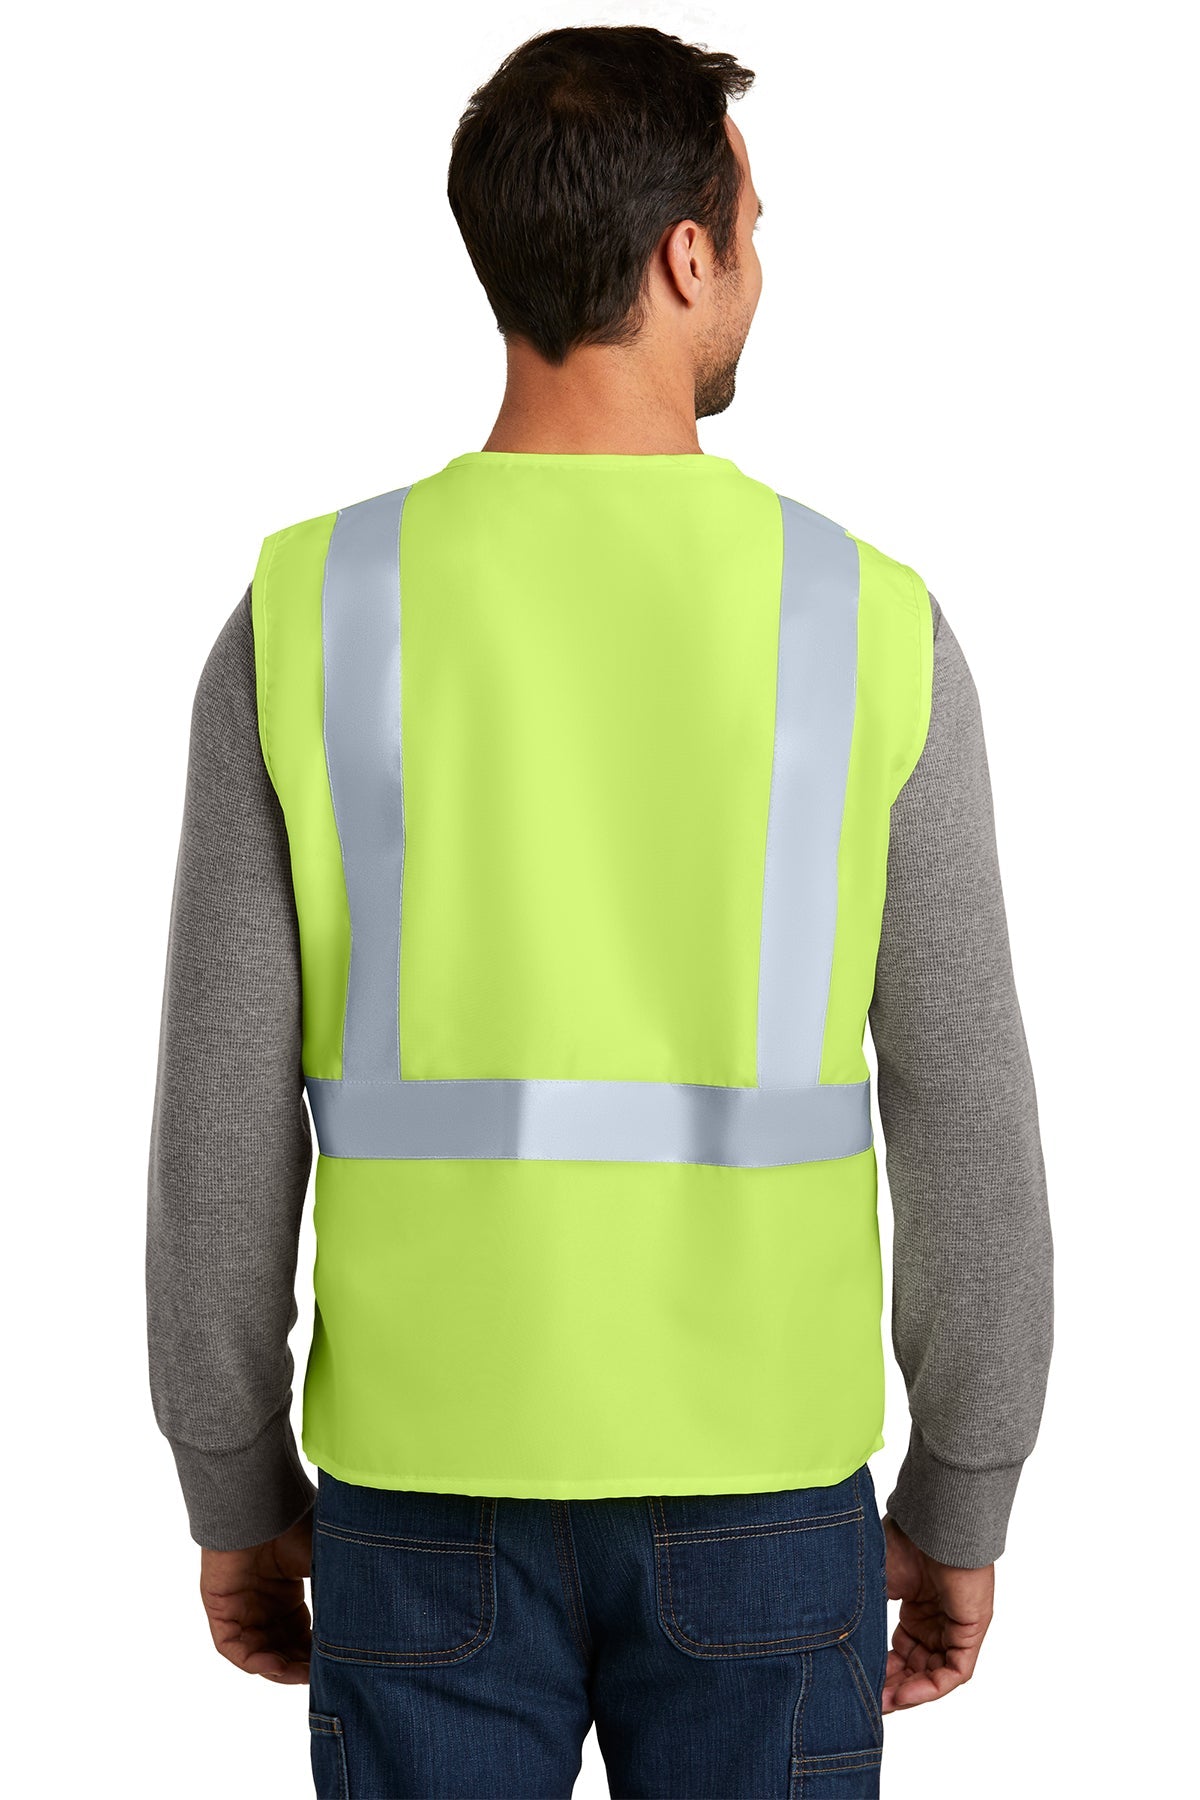 cornerstone_csv400 _safety yellow/ reflective_company_logo_jackets